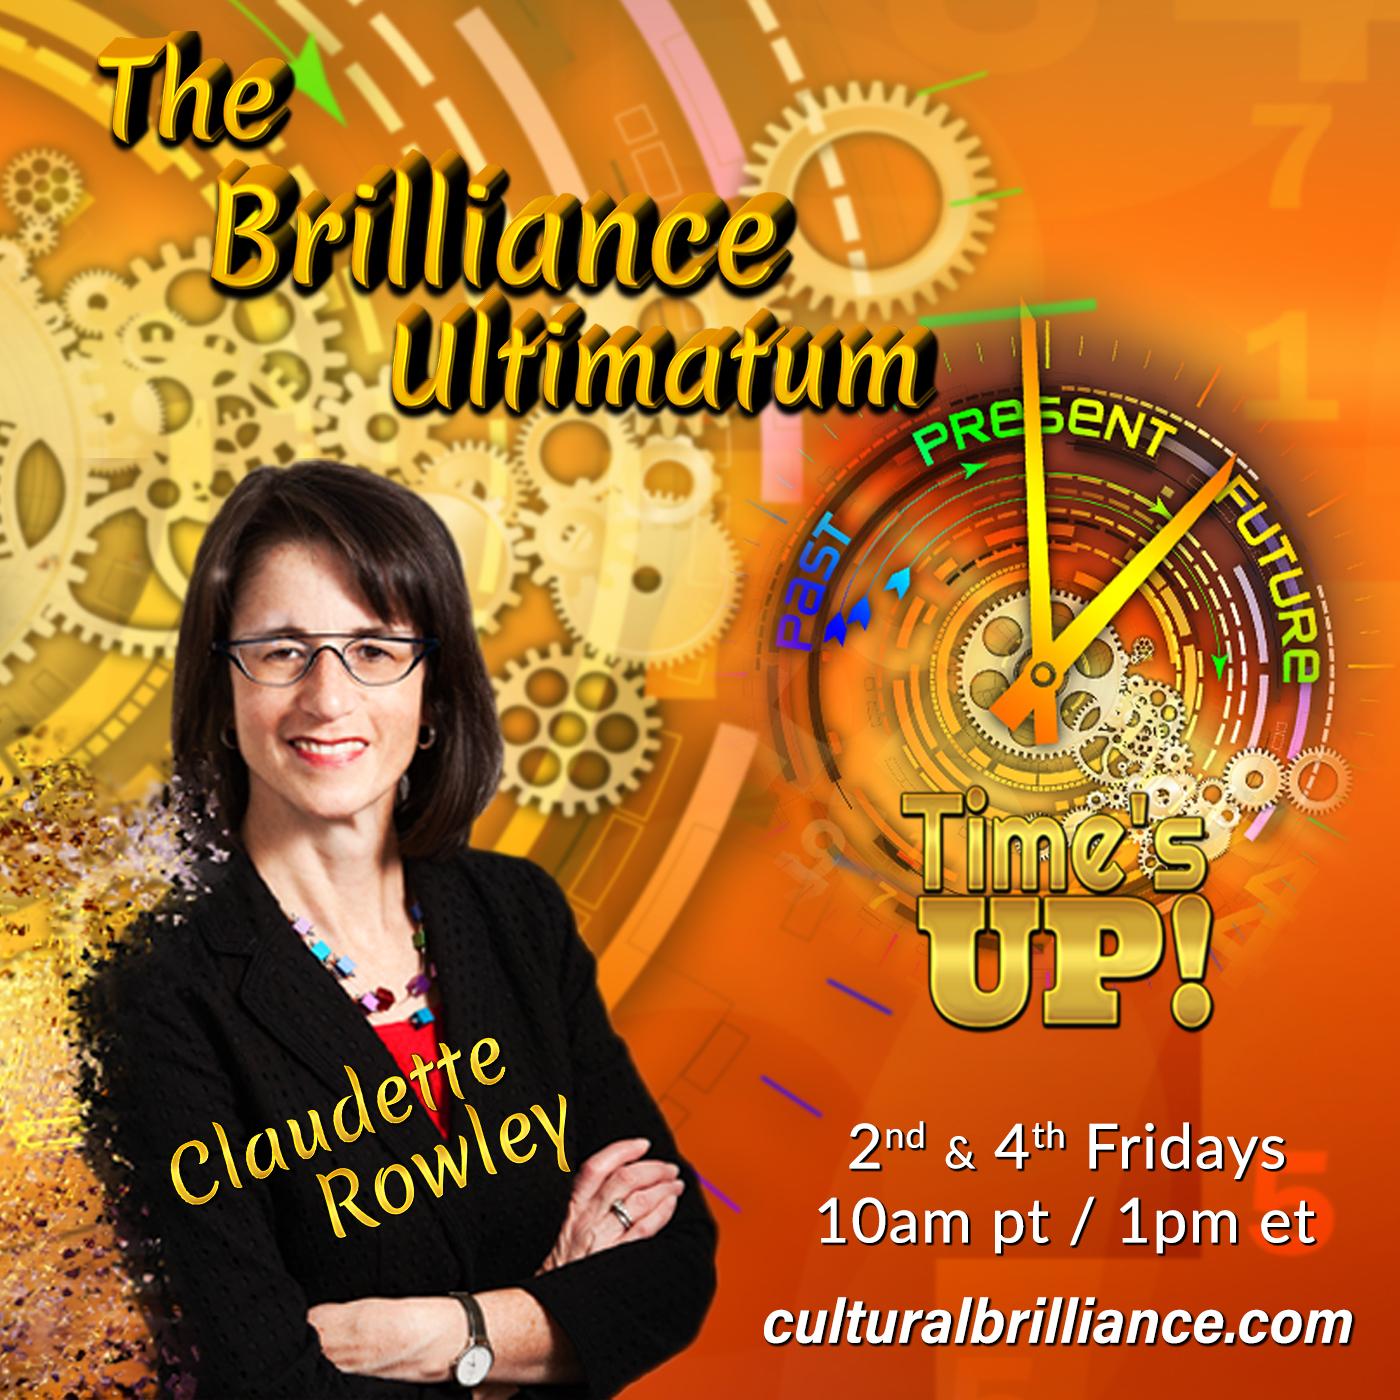 The Brilliance Ultimatum™ with Claudette Rowley